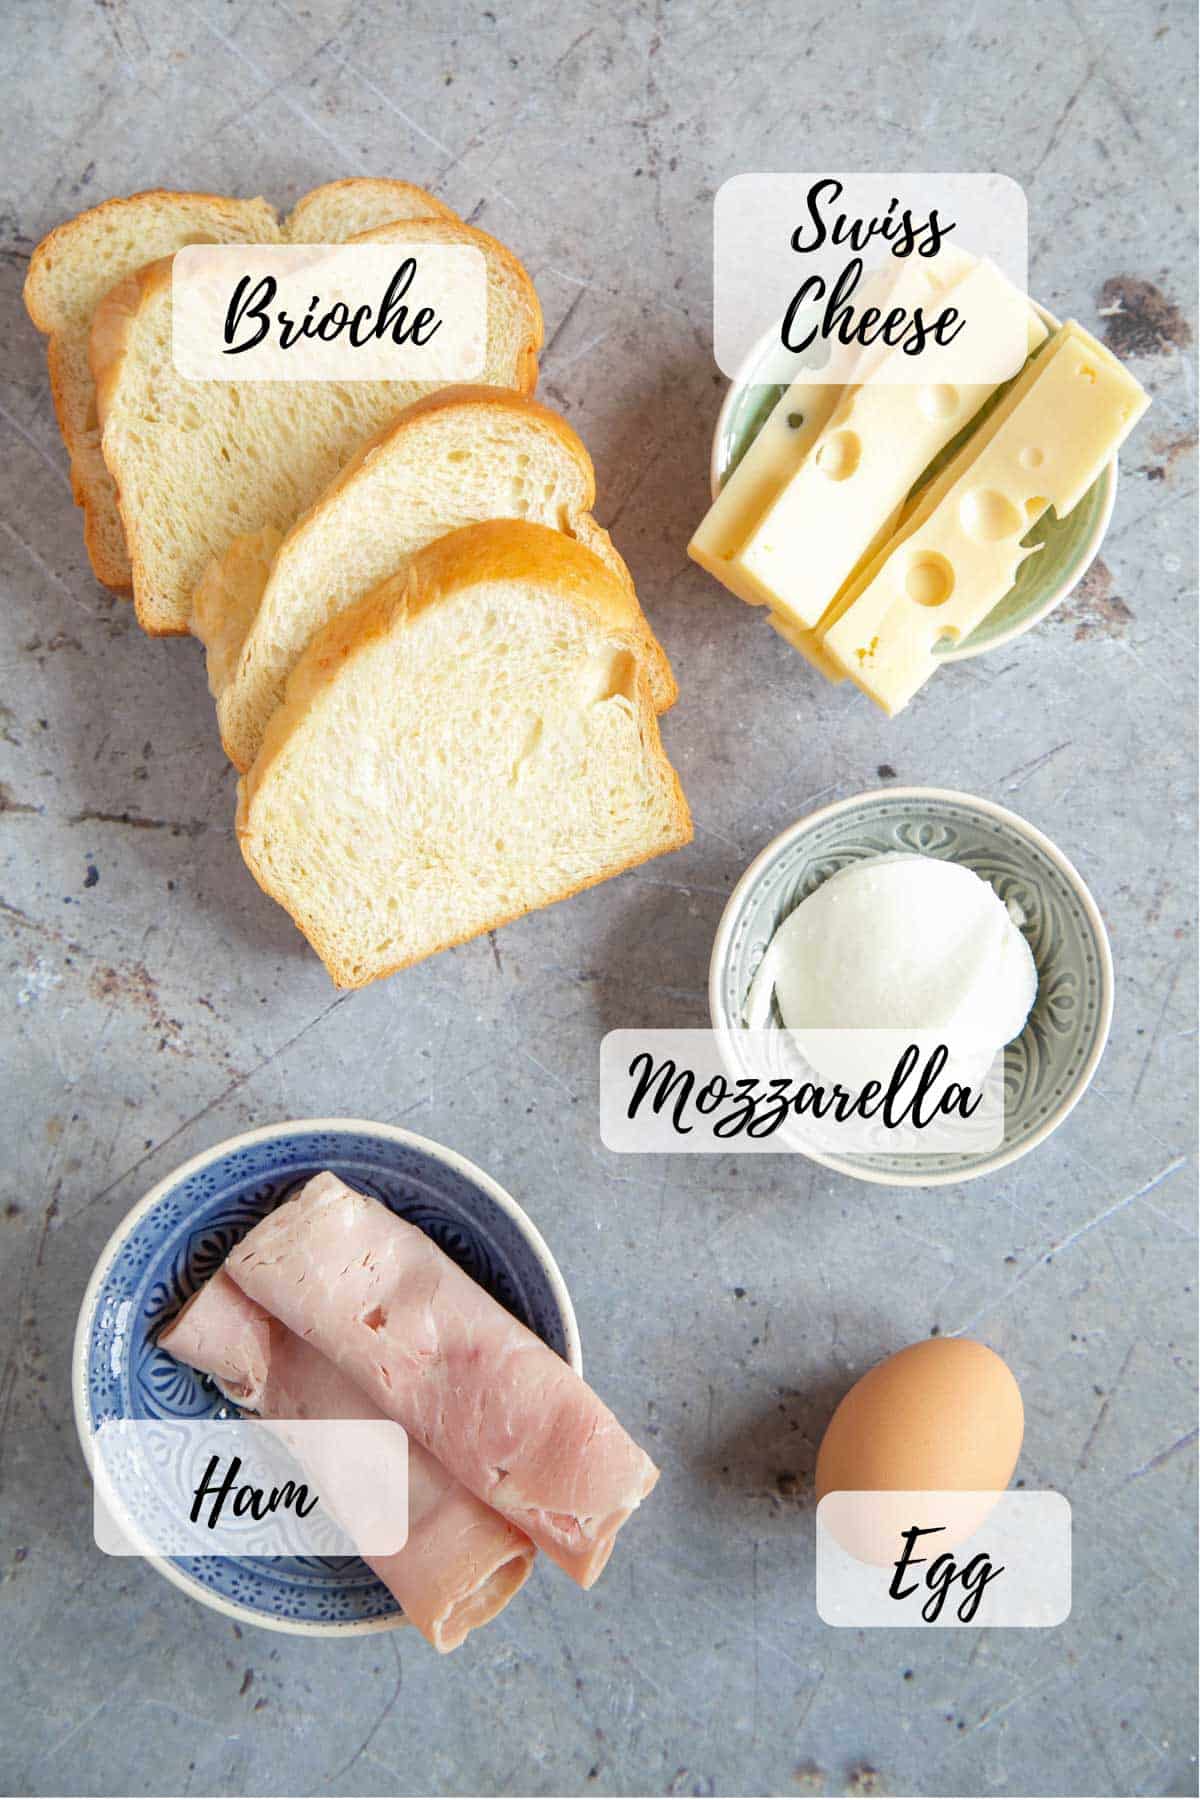 Ingredients: ham, Swiss cheese, mozzarella, an egg, and sliced brioche